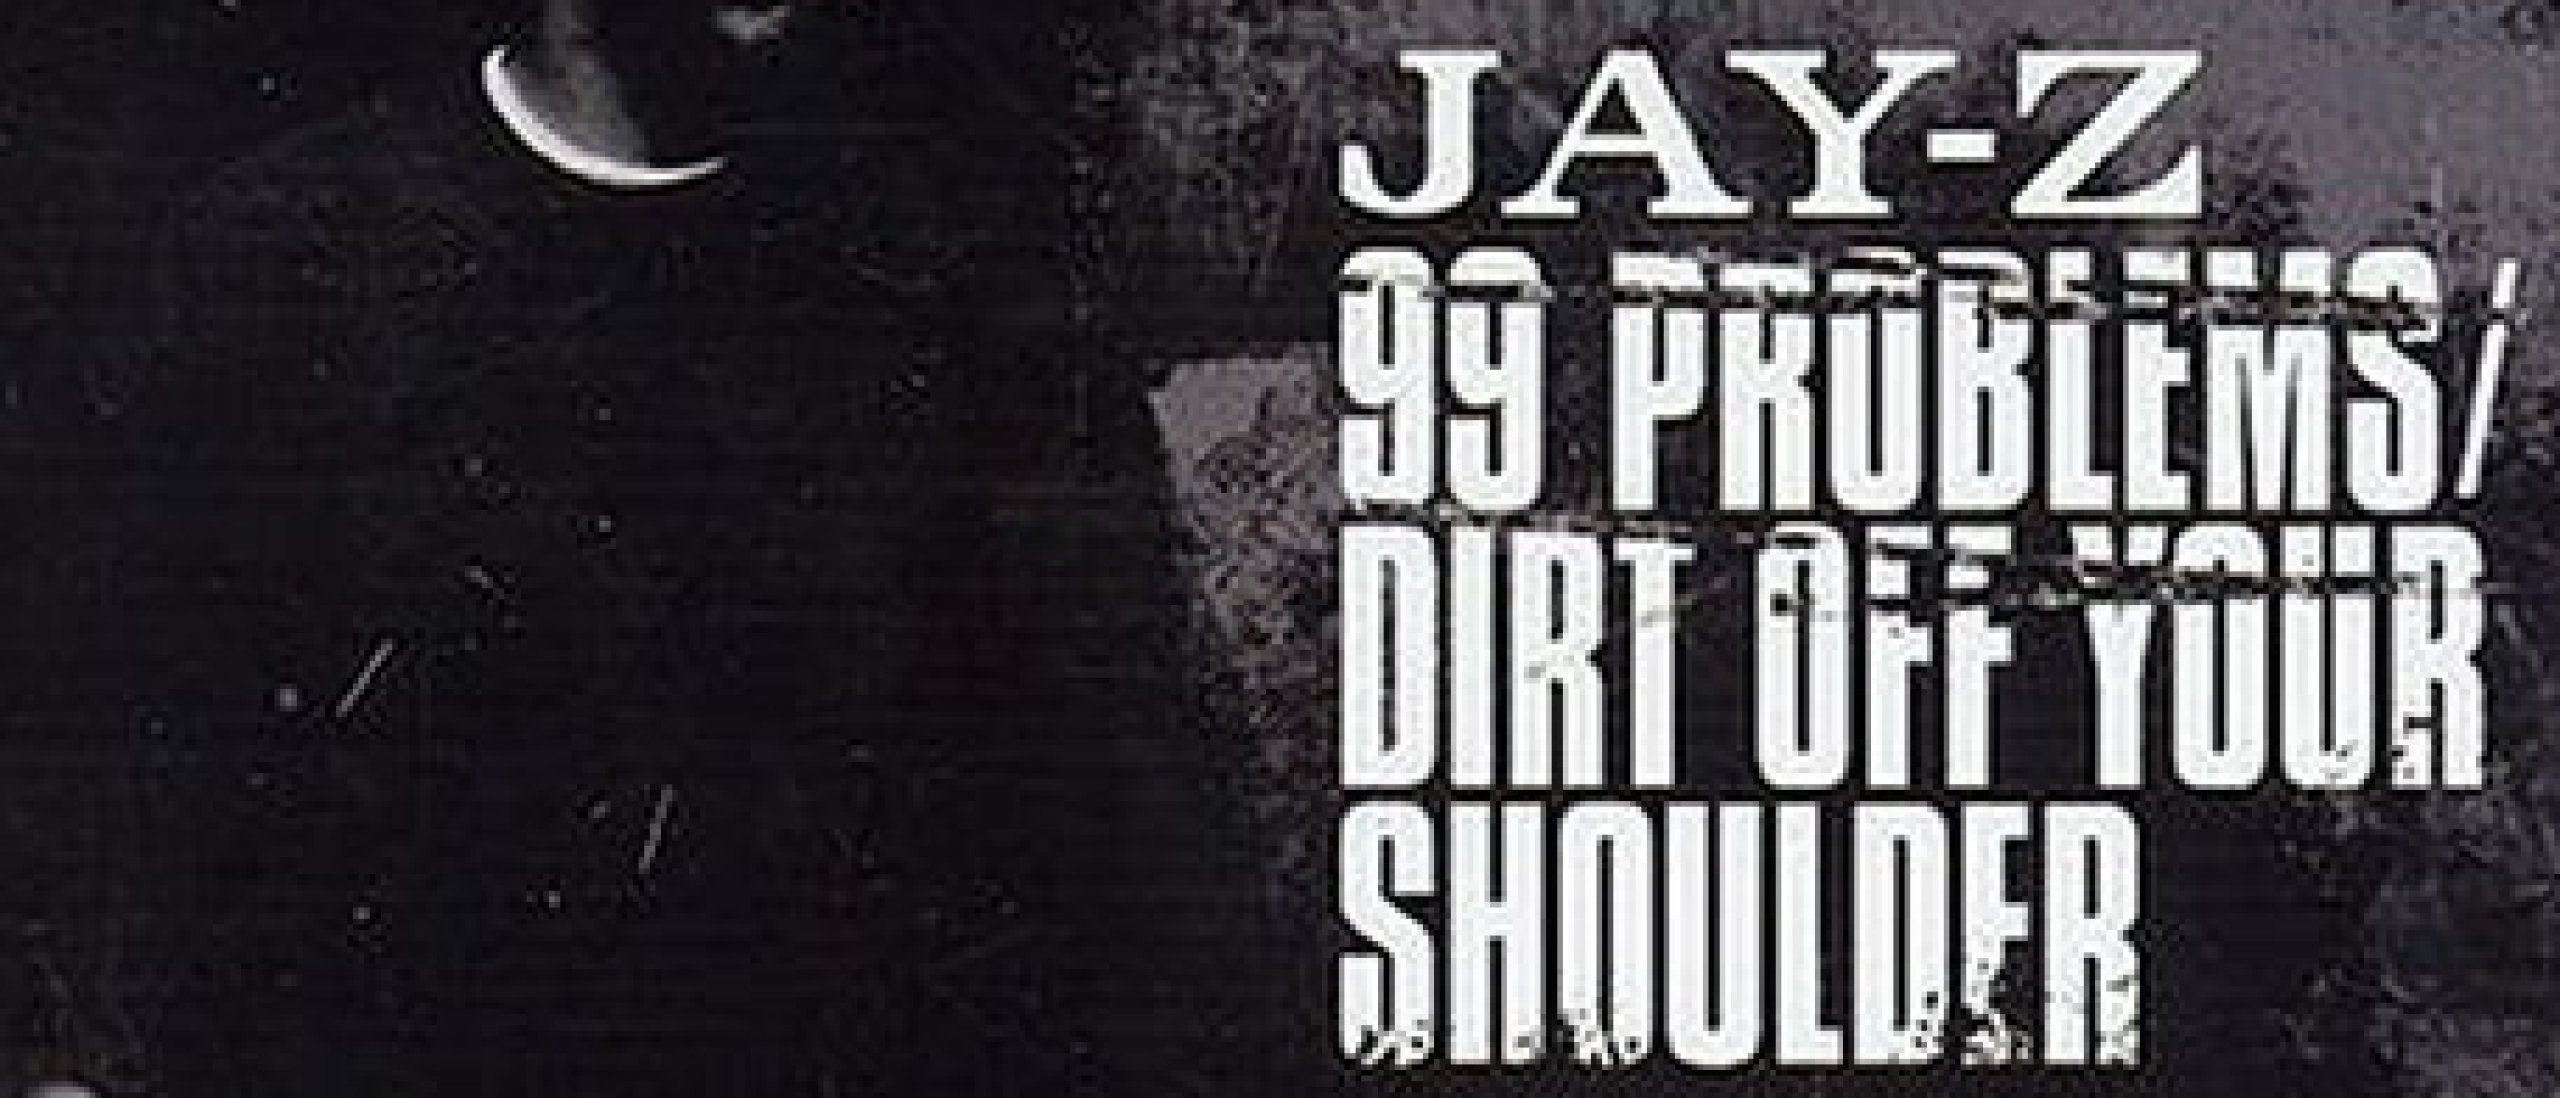 Forgotten Song Friday Jay-Z met 99 Problems